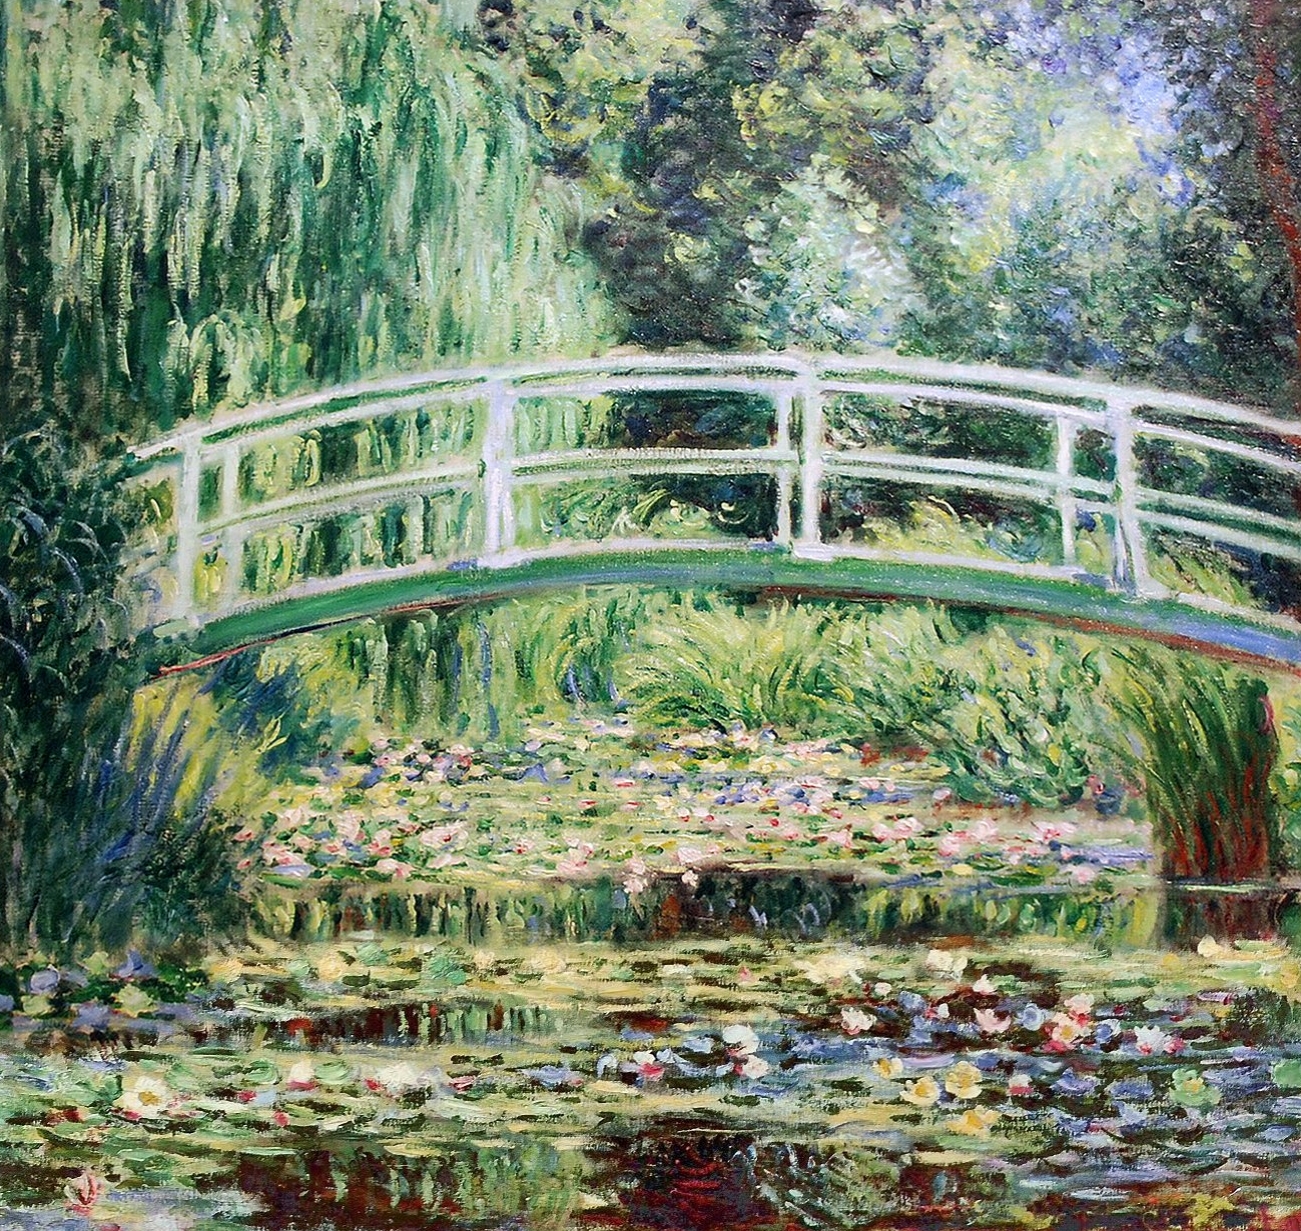 Claude+Monet-1840-1926 (402).jpg